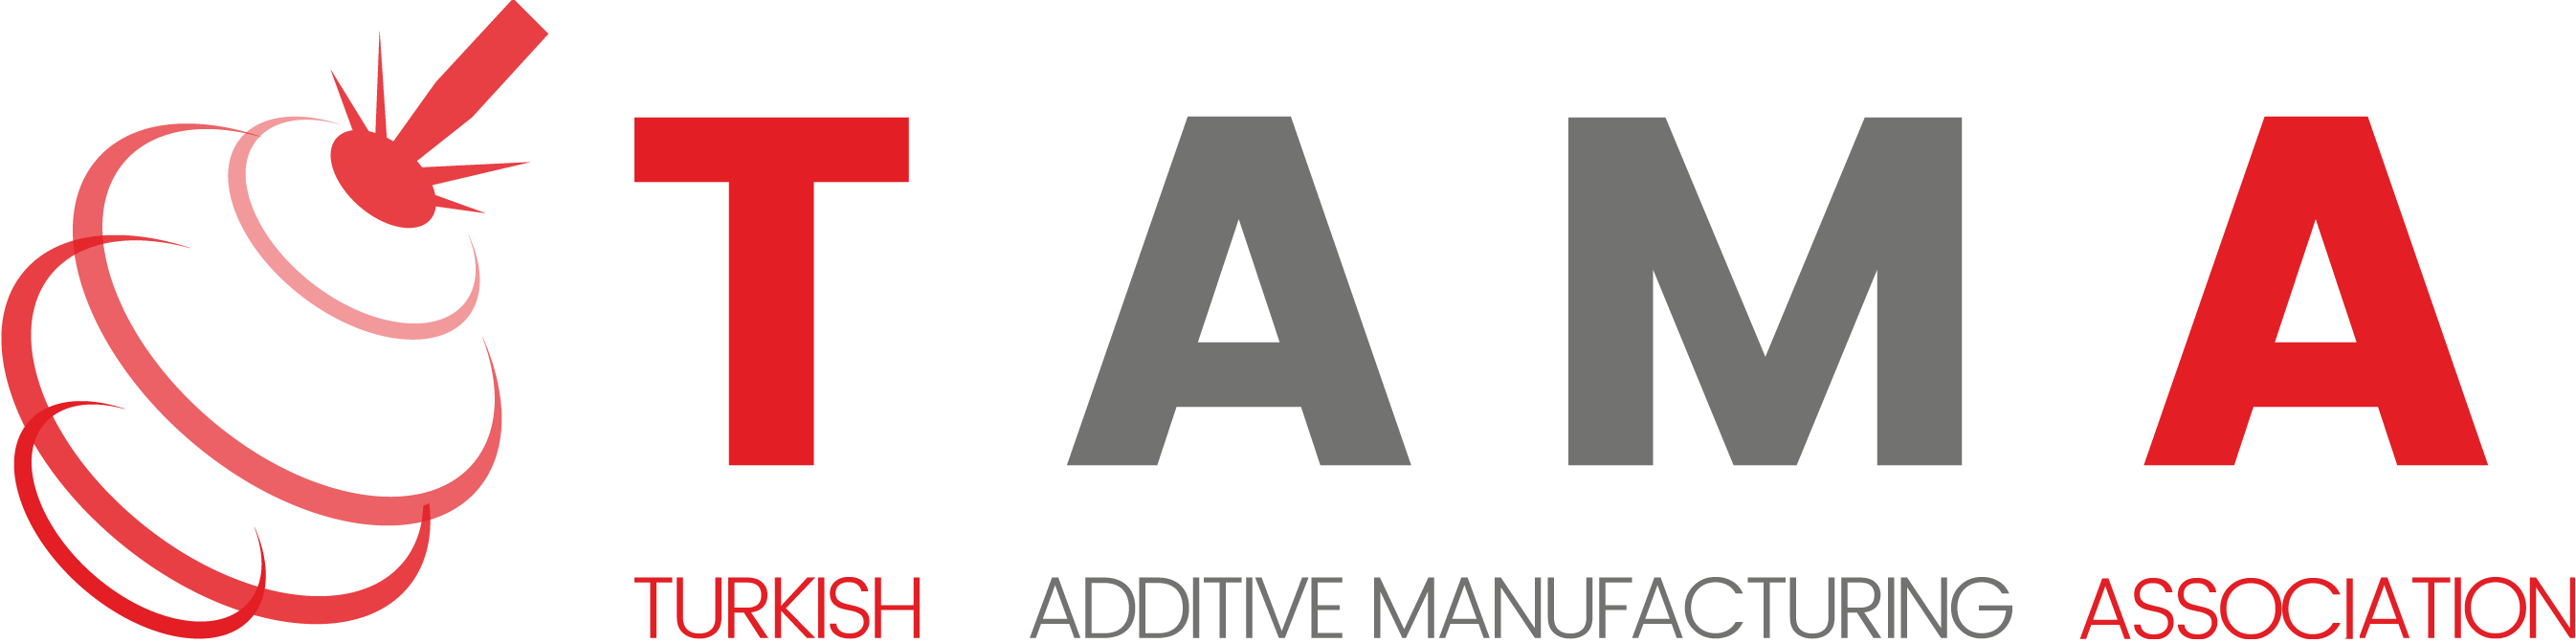 Turkish Additive Manufacturing Association